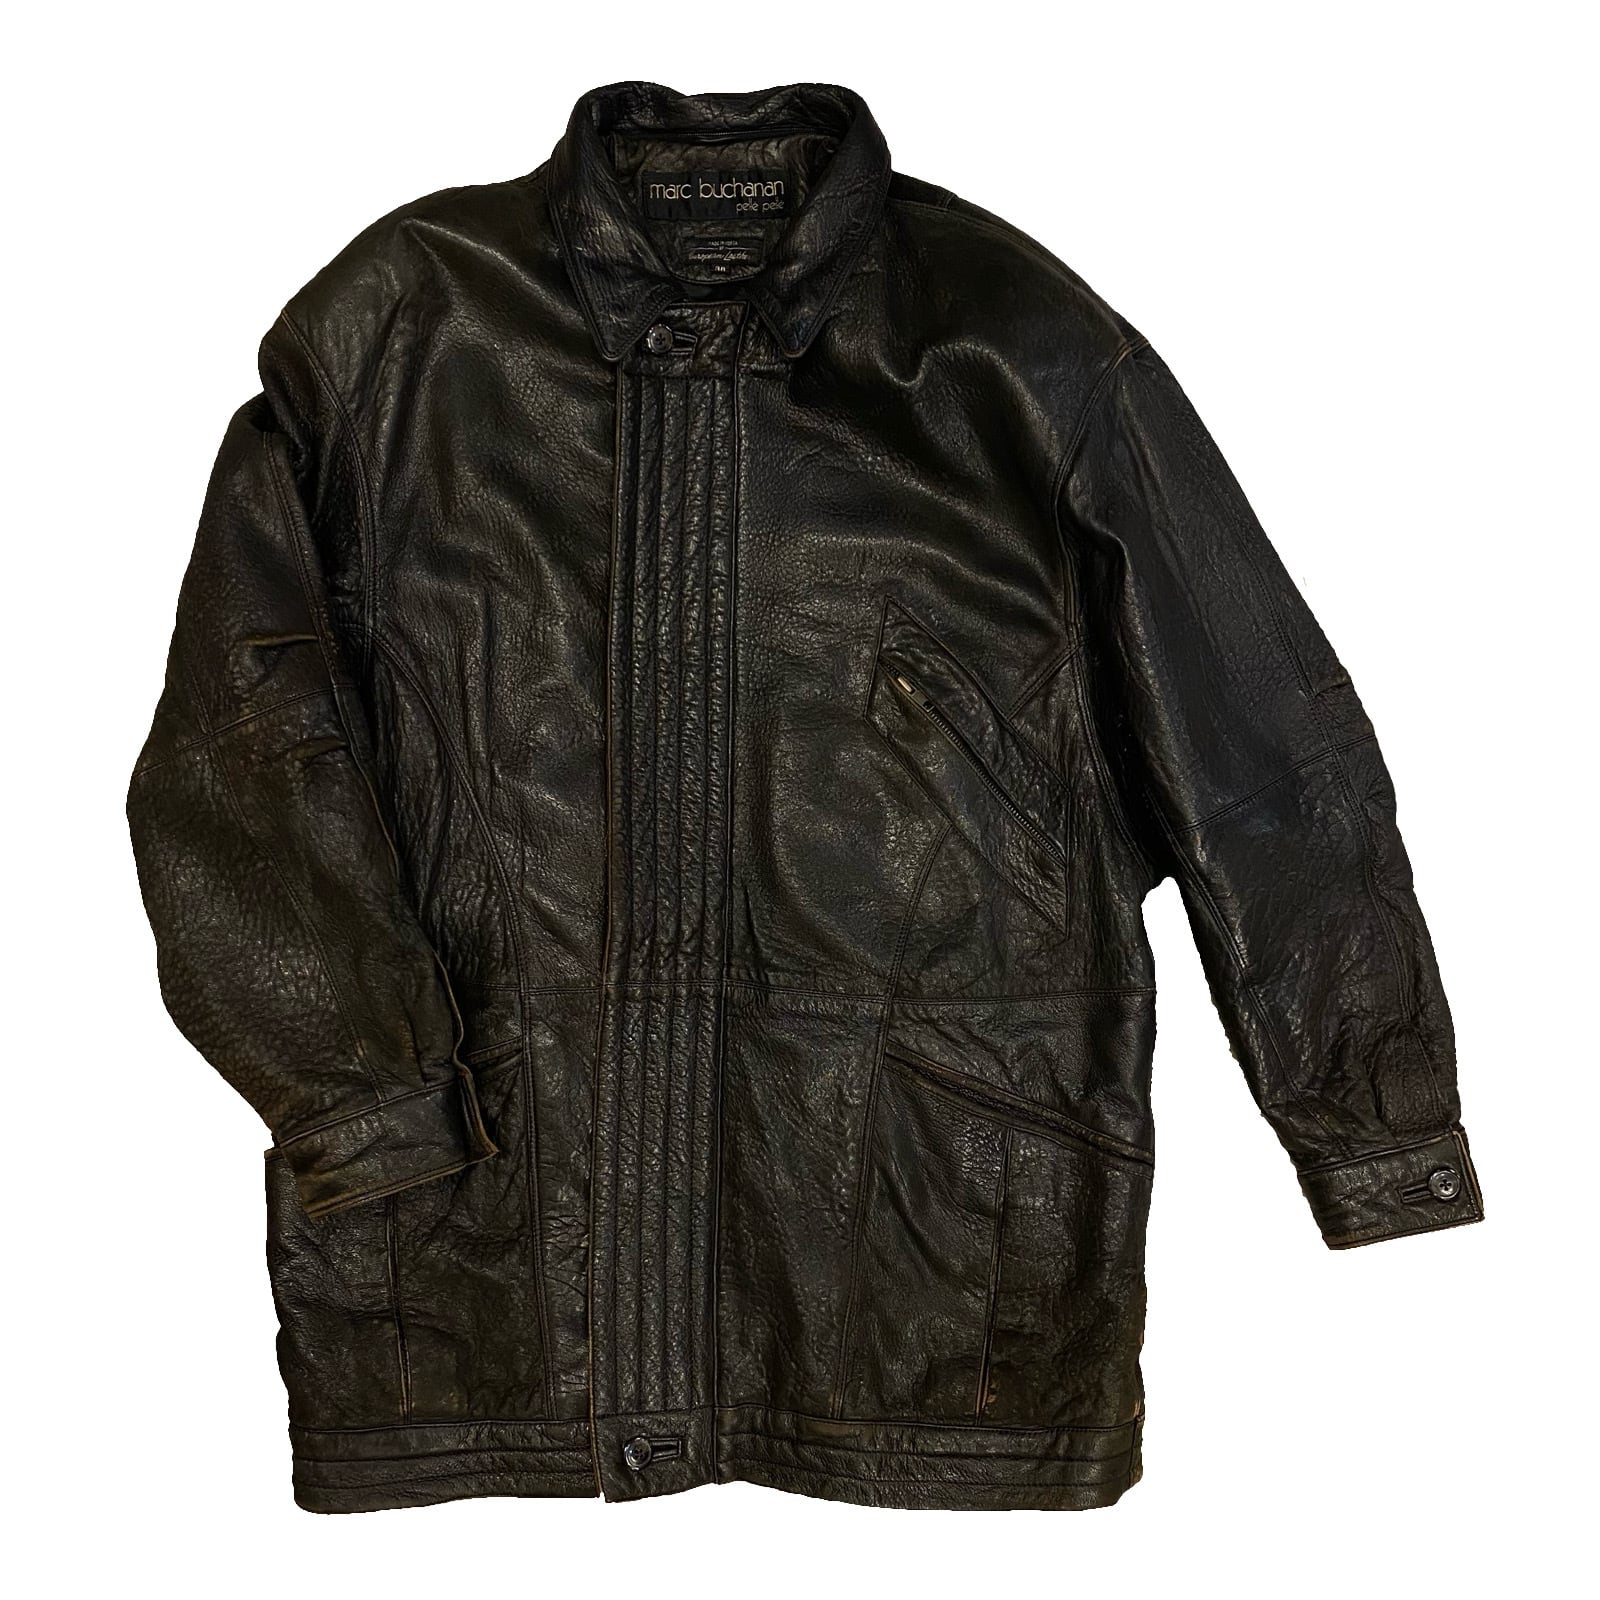 Pelle Pelle design leather jacket ペレペレ レザージャケット